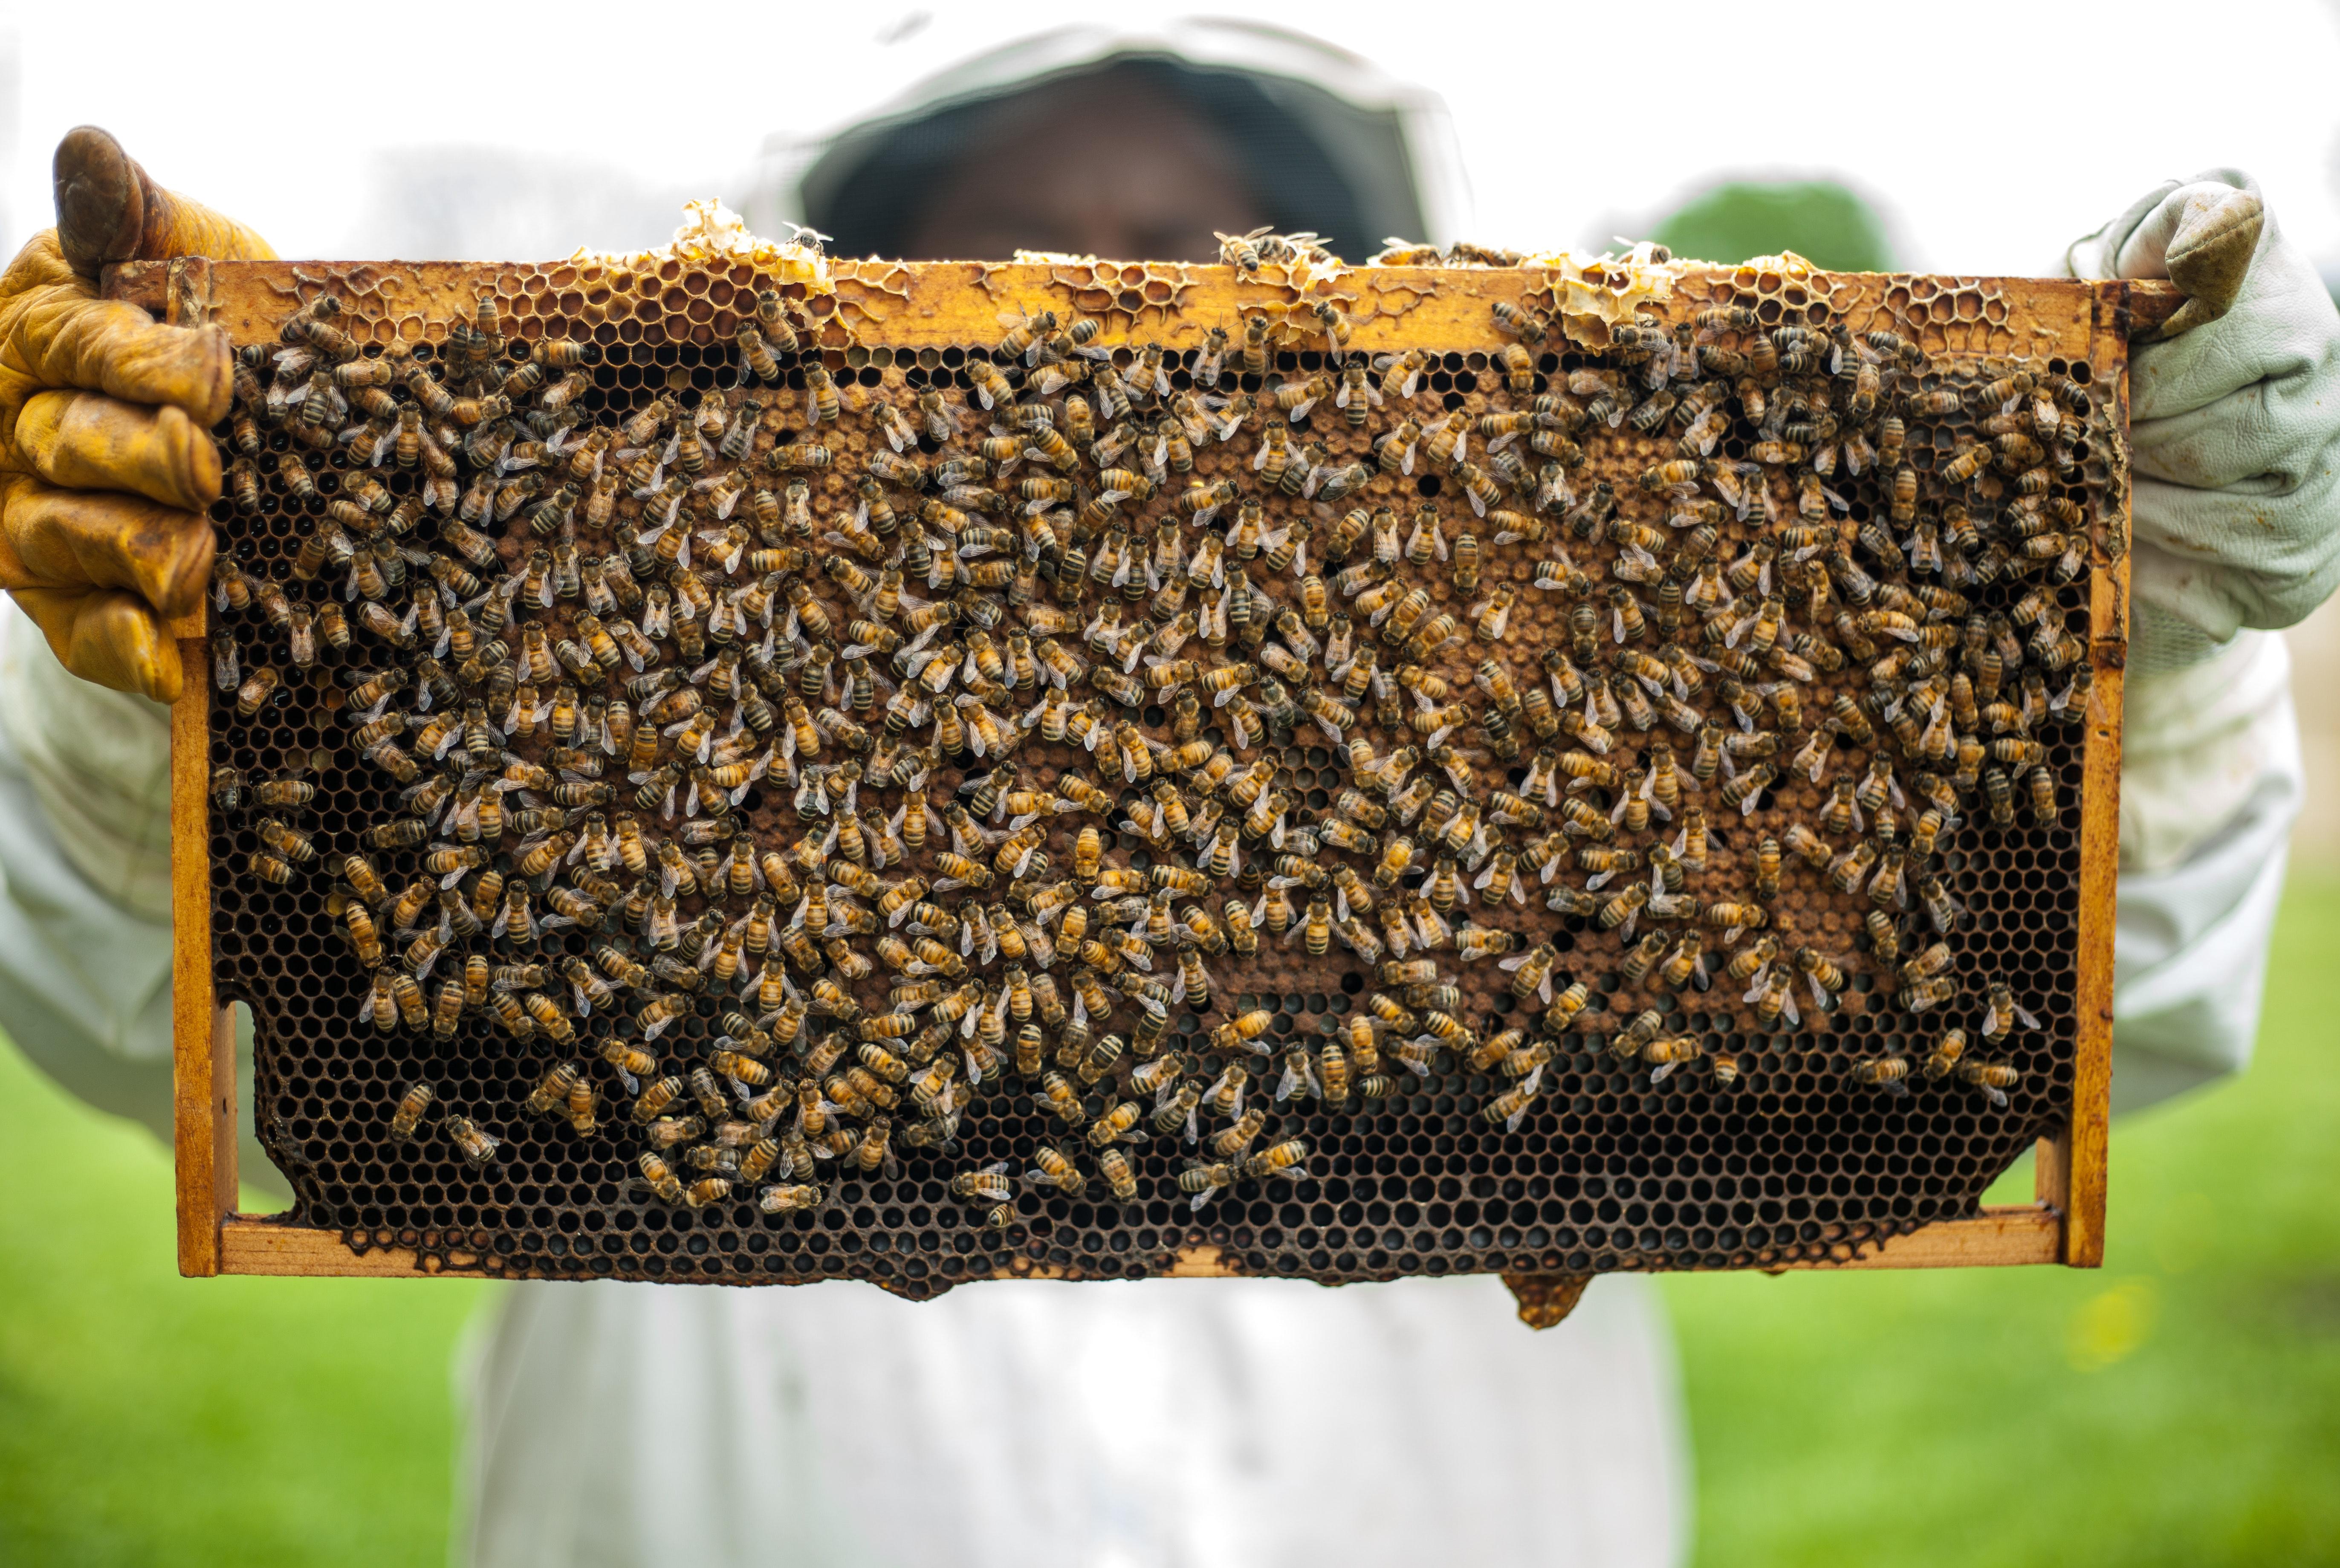 Amazing Beehive Photo